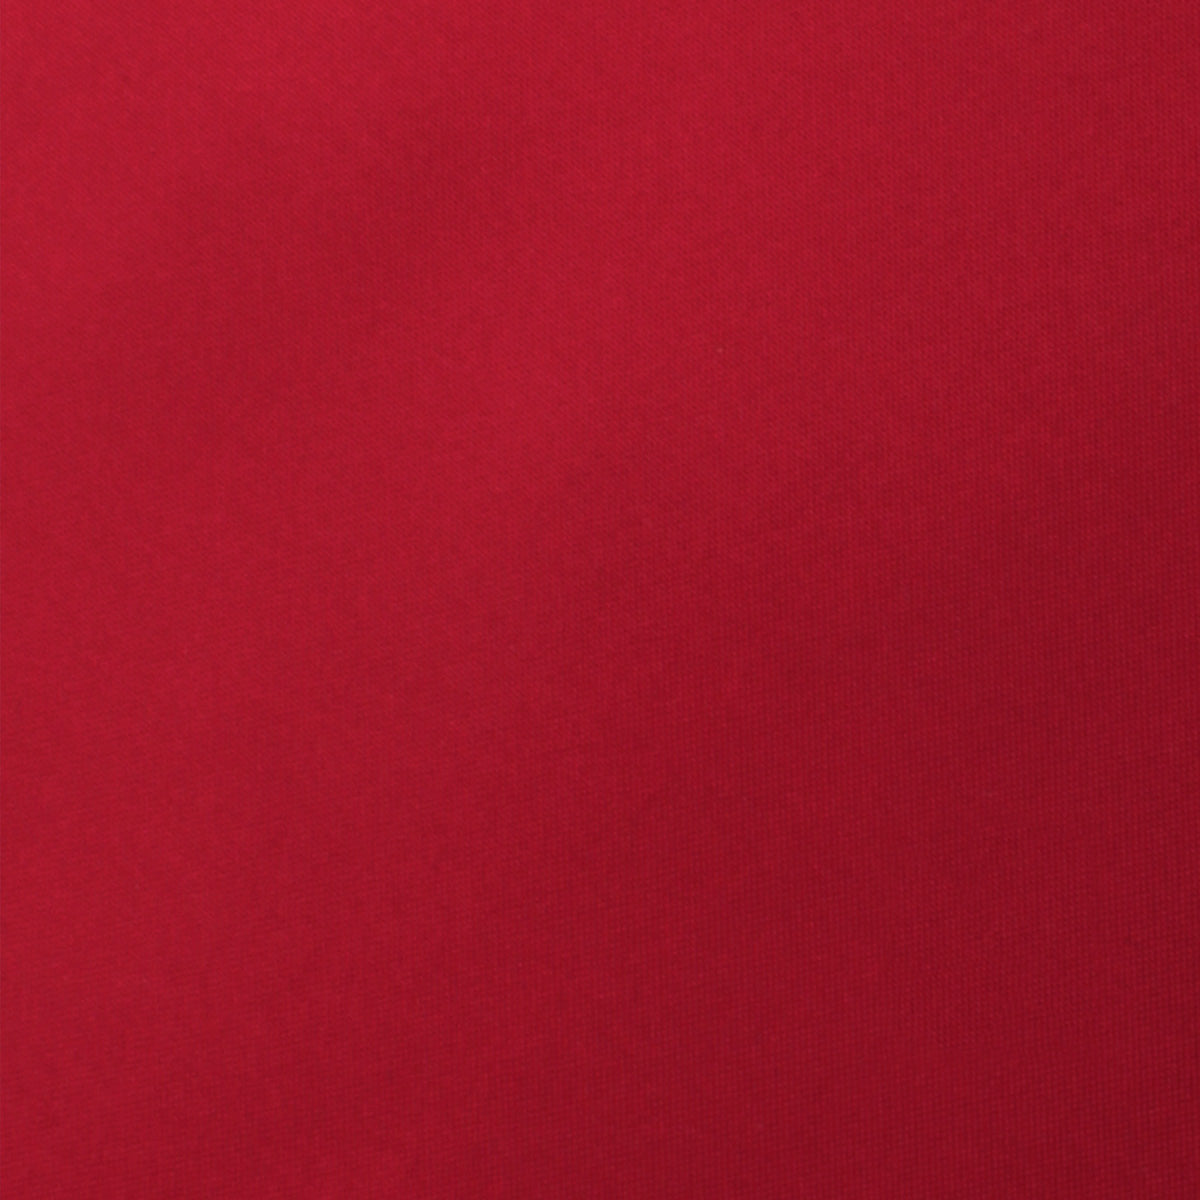 Carmine Red Satin Fabric Swatch